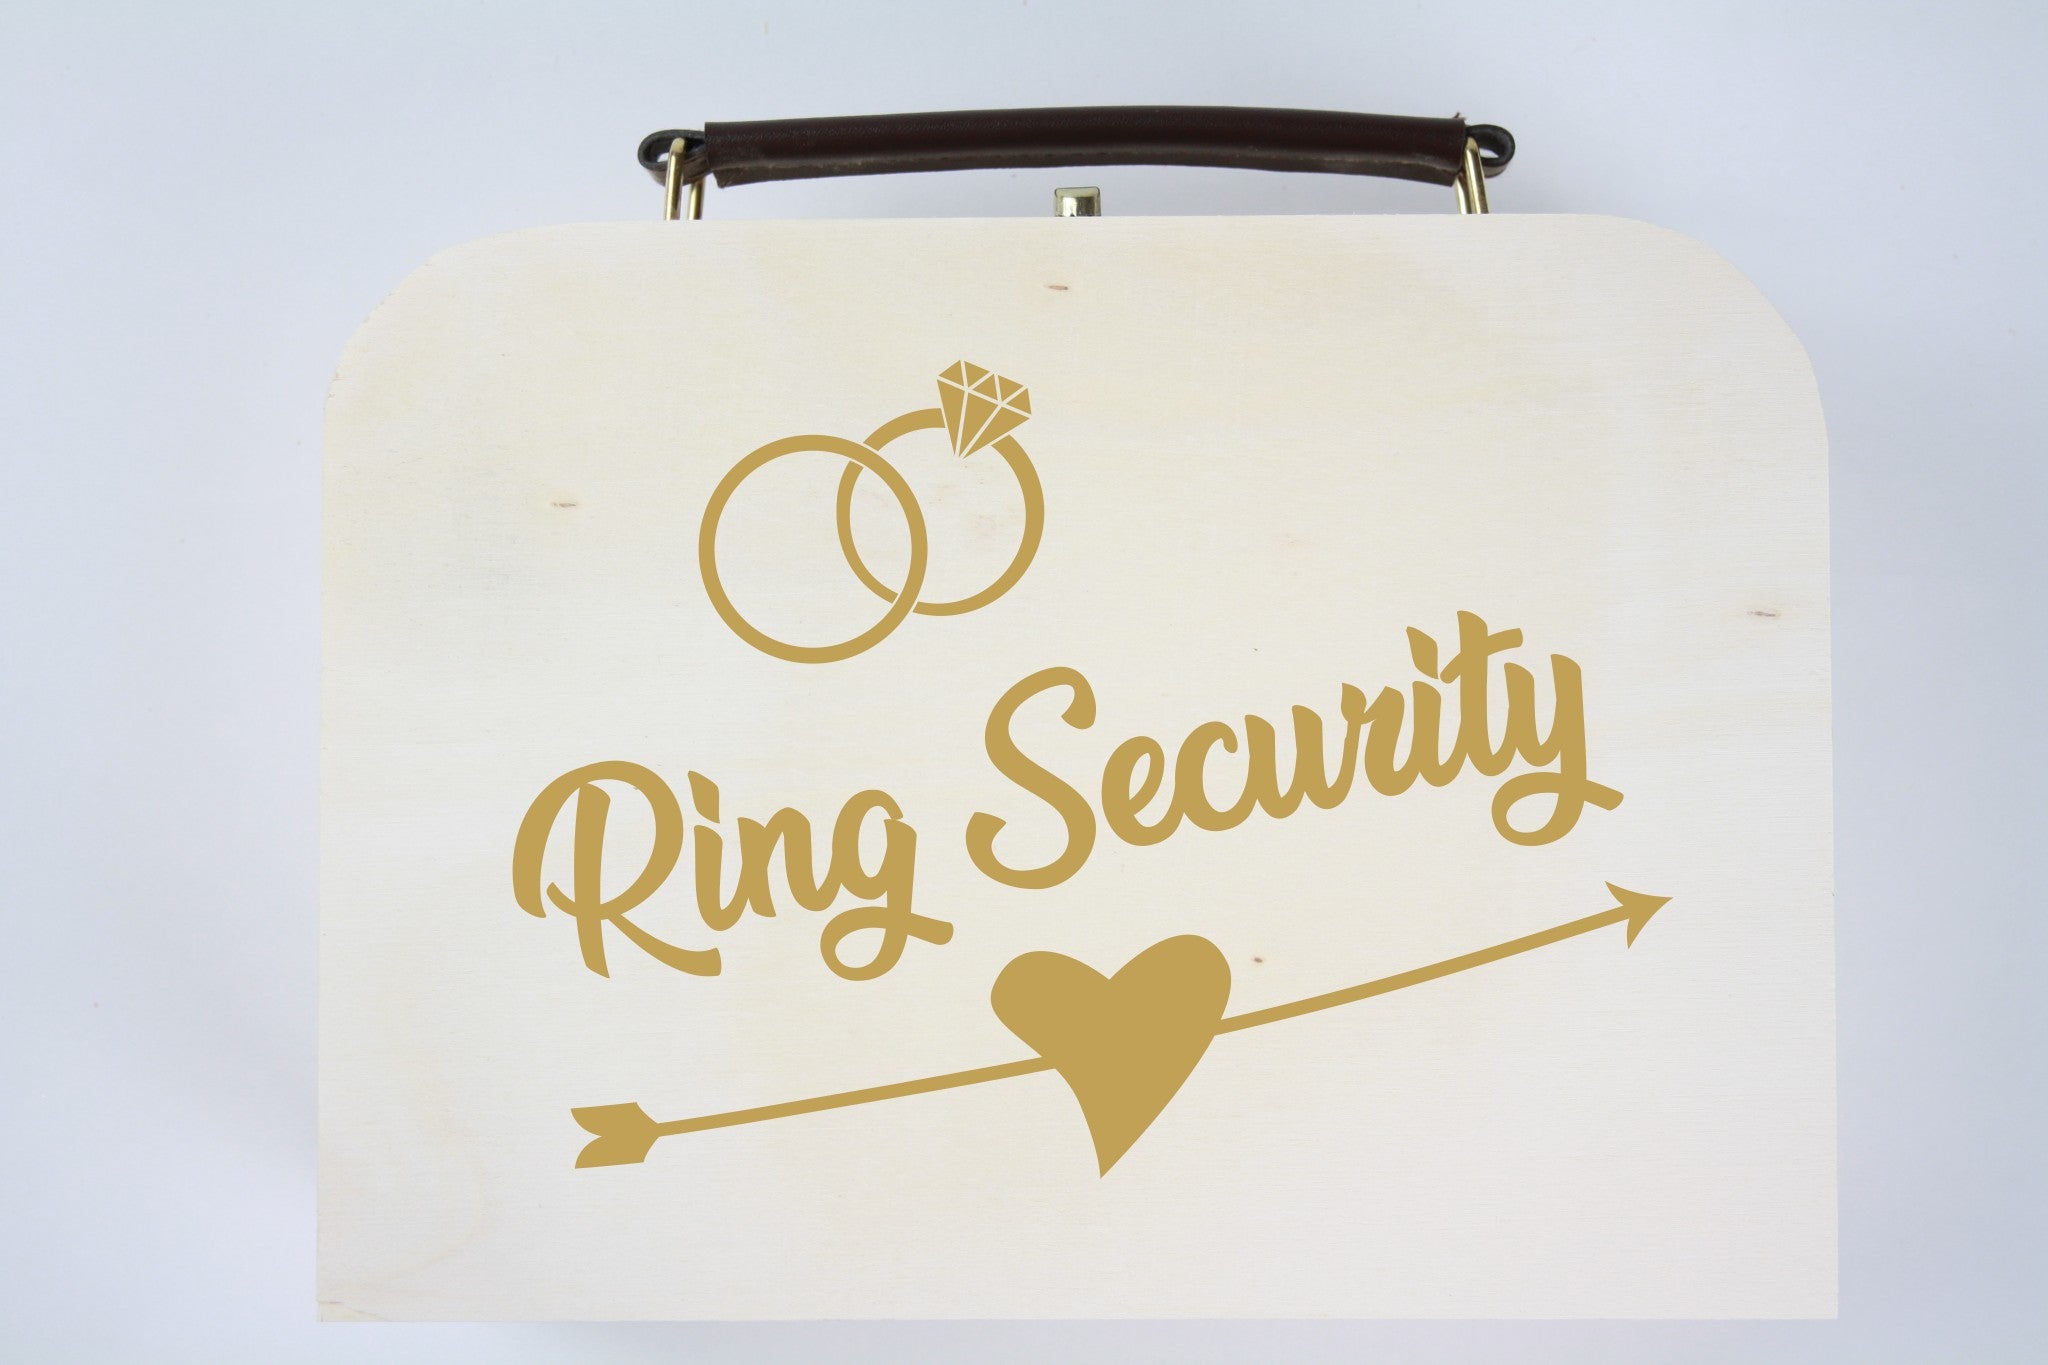 Houten koffertje, Trouwkoffer. Gravure met 'Ring security'.